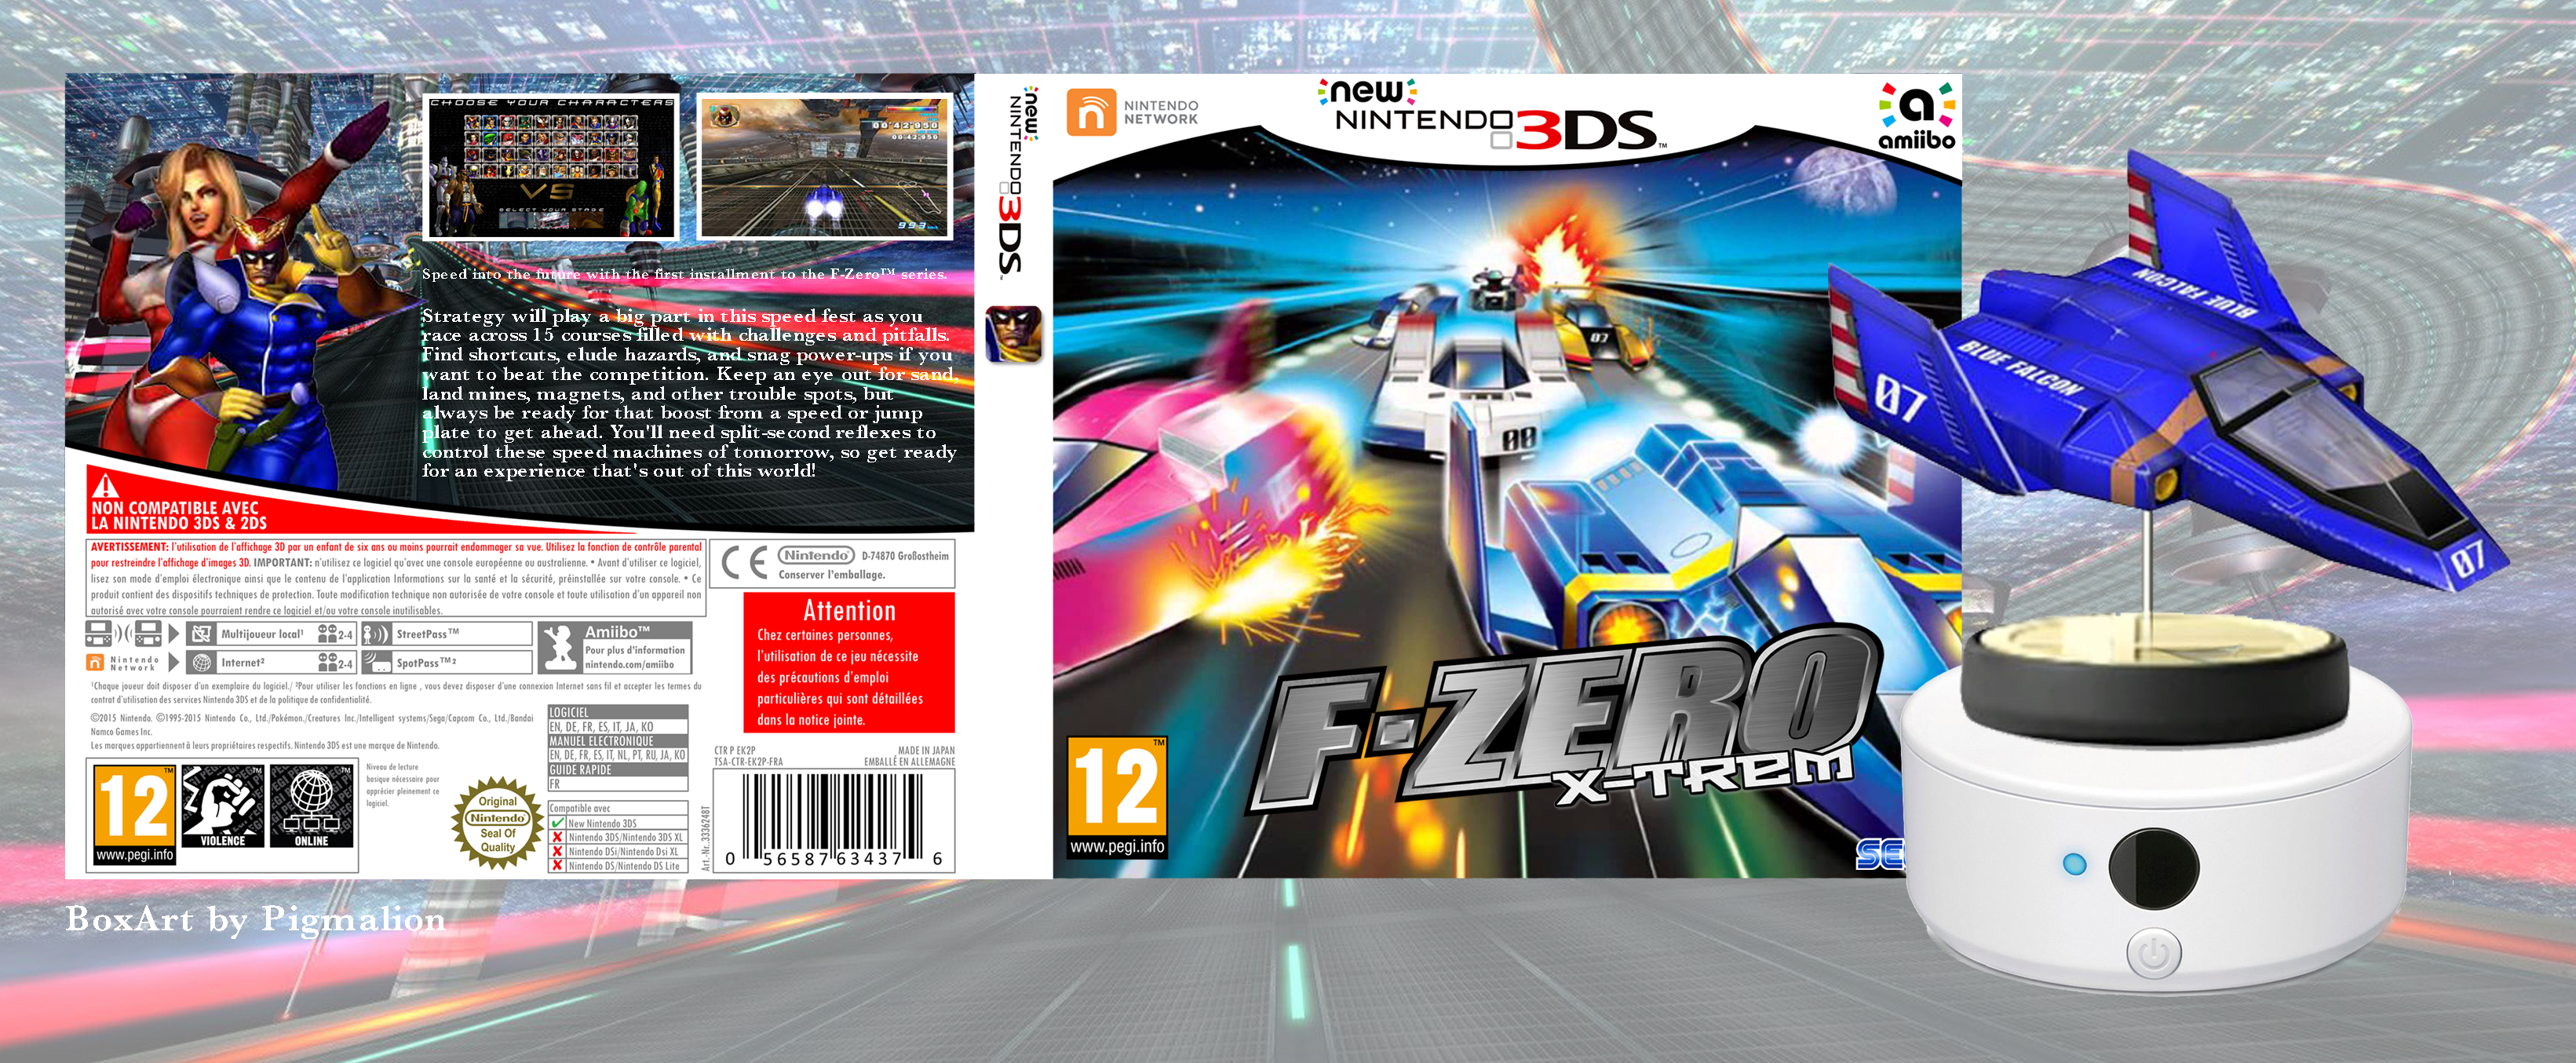 F-Zero X-trem box cover